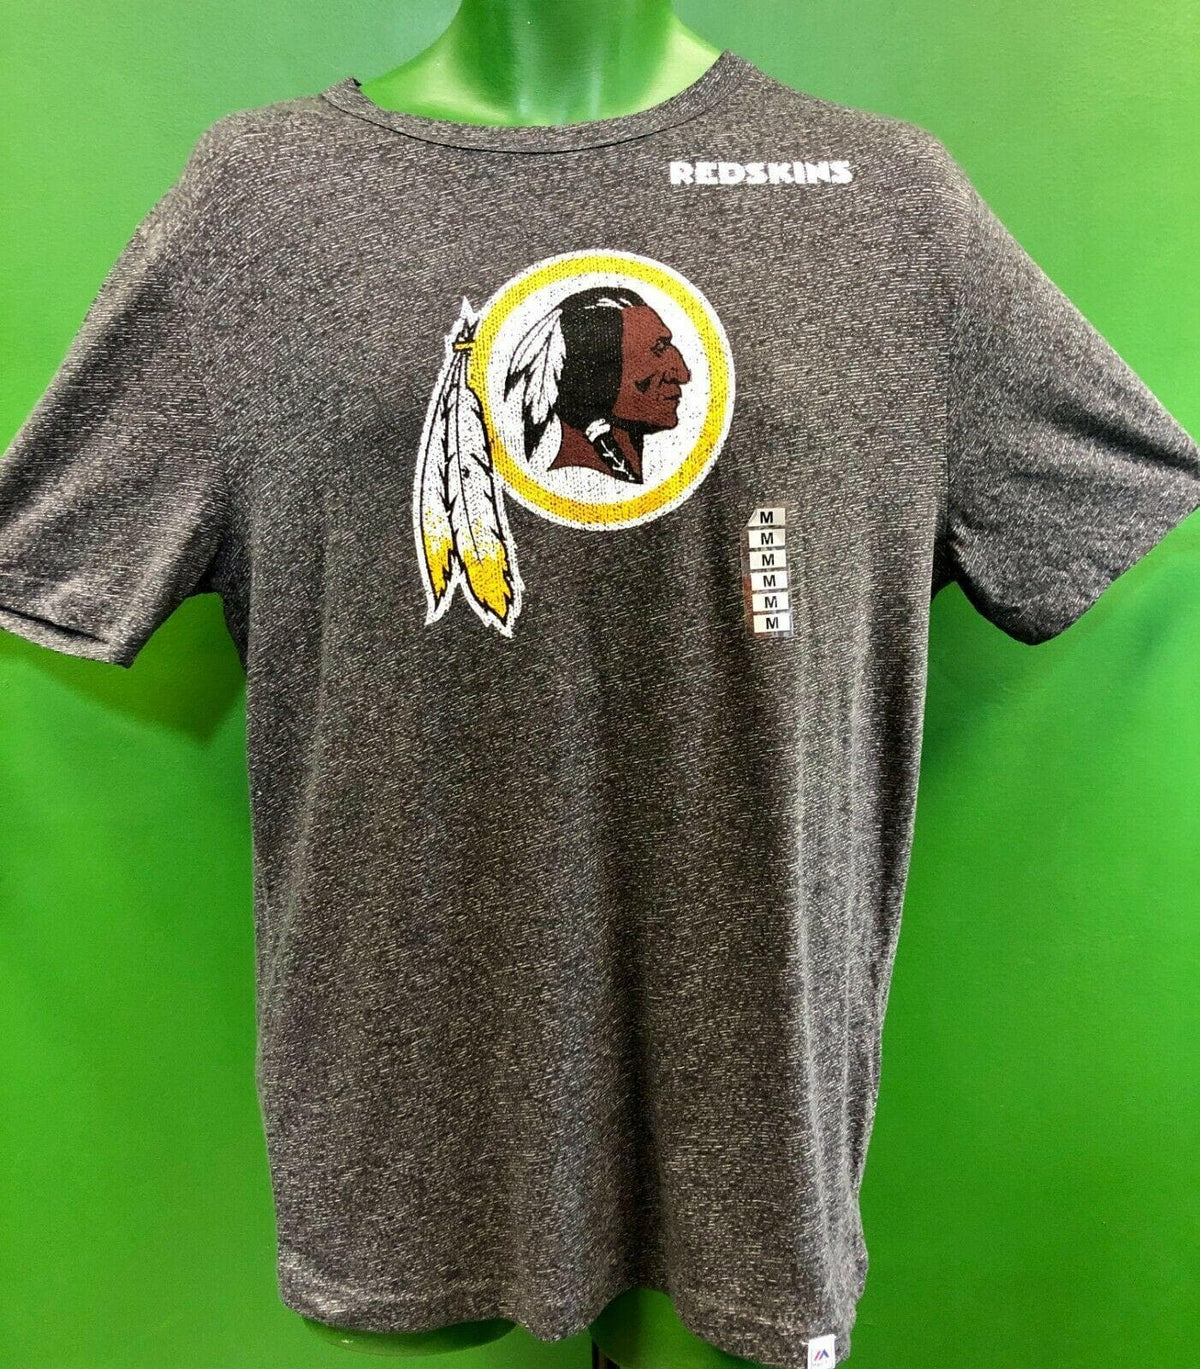 NFL Washington Commanders (Redskins) Majestic Marled T-Shirt Men's Medium NWT